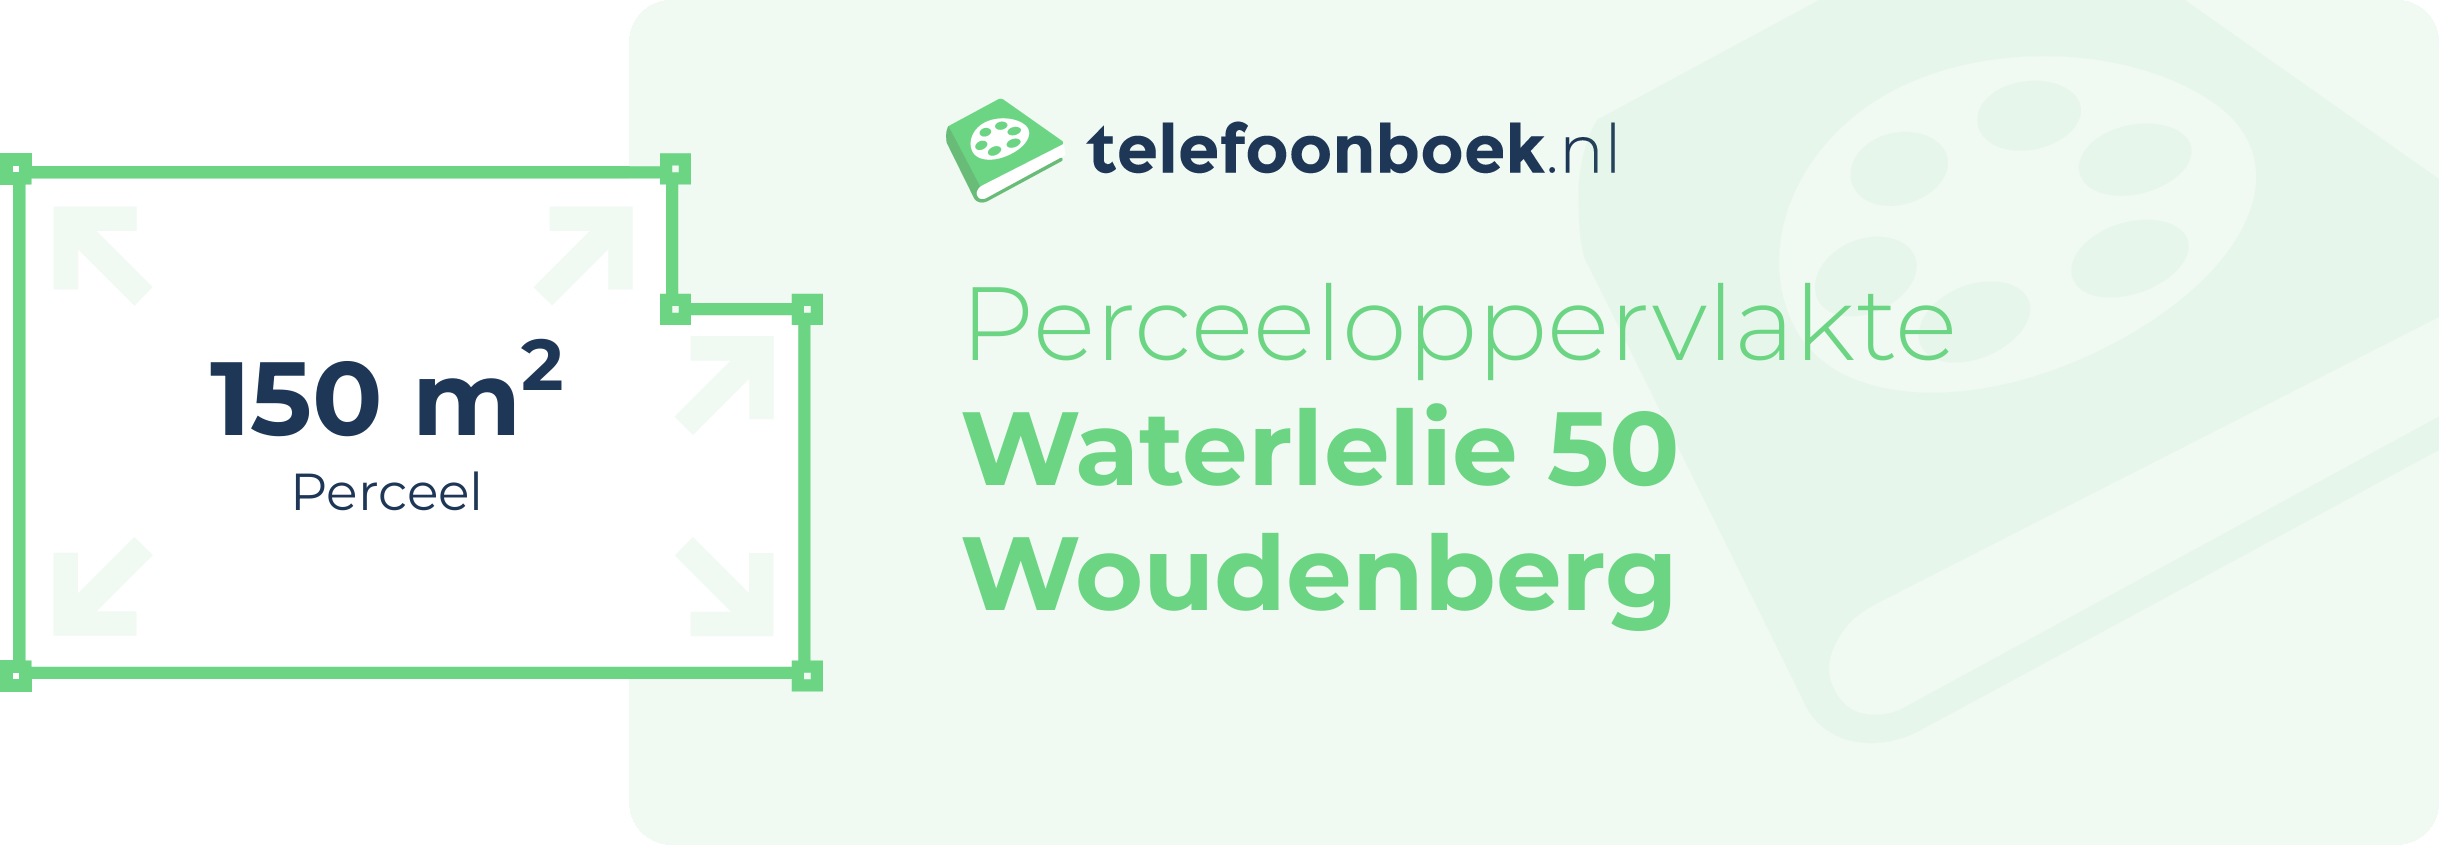 Perceeloppervlakte Waterlelie 50 Woudenberg